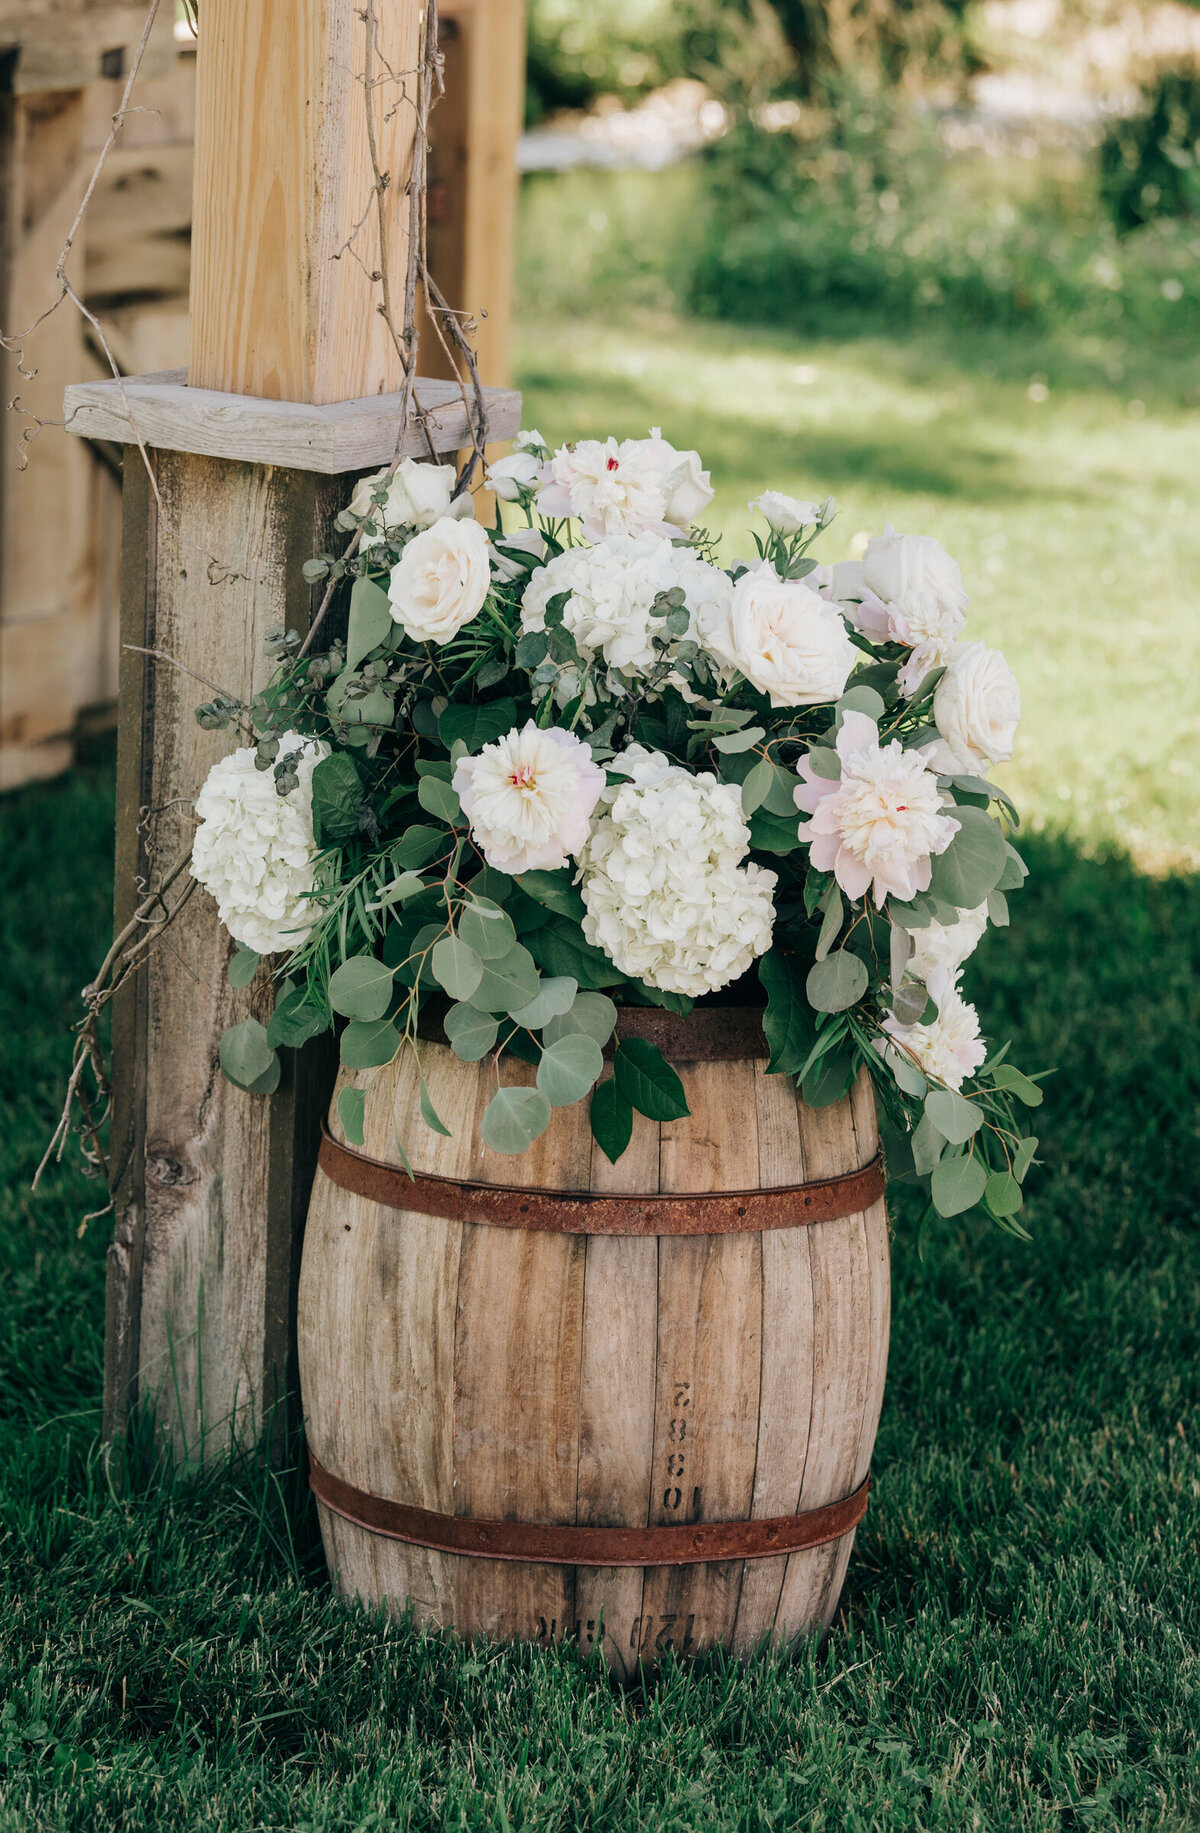 Elegant white florals and eucalyptus on decorative barrel at outdoor wedding ceremony